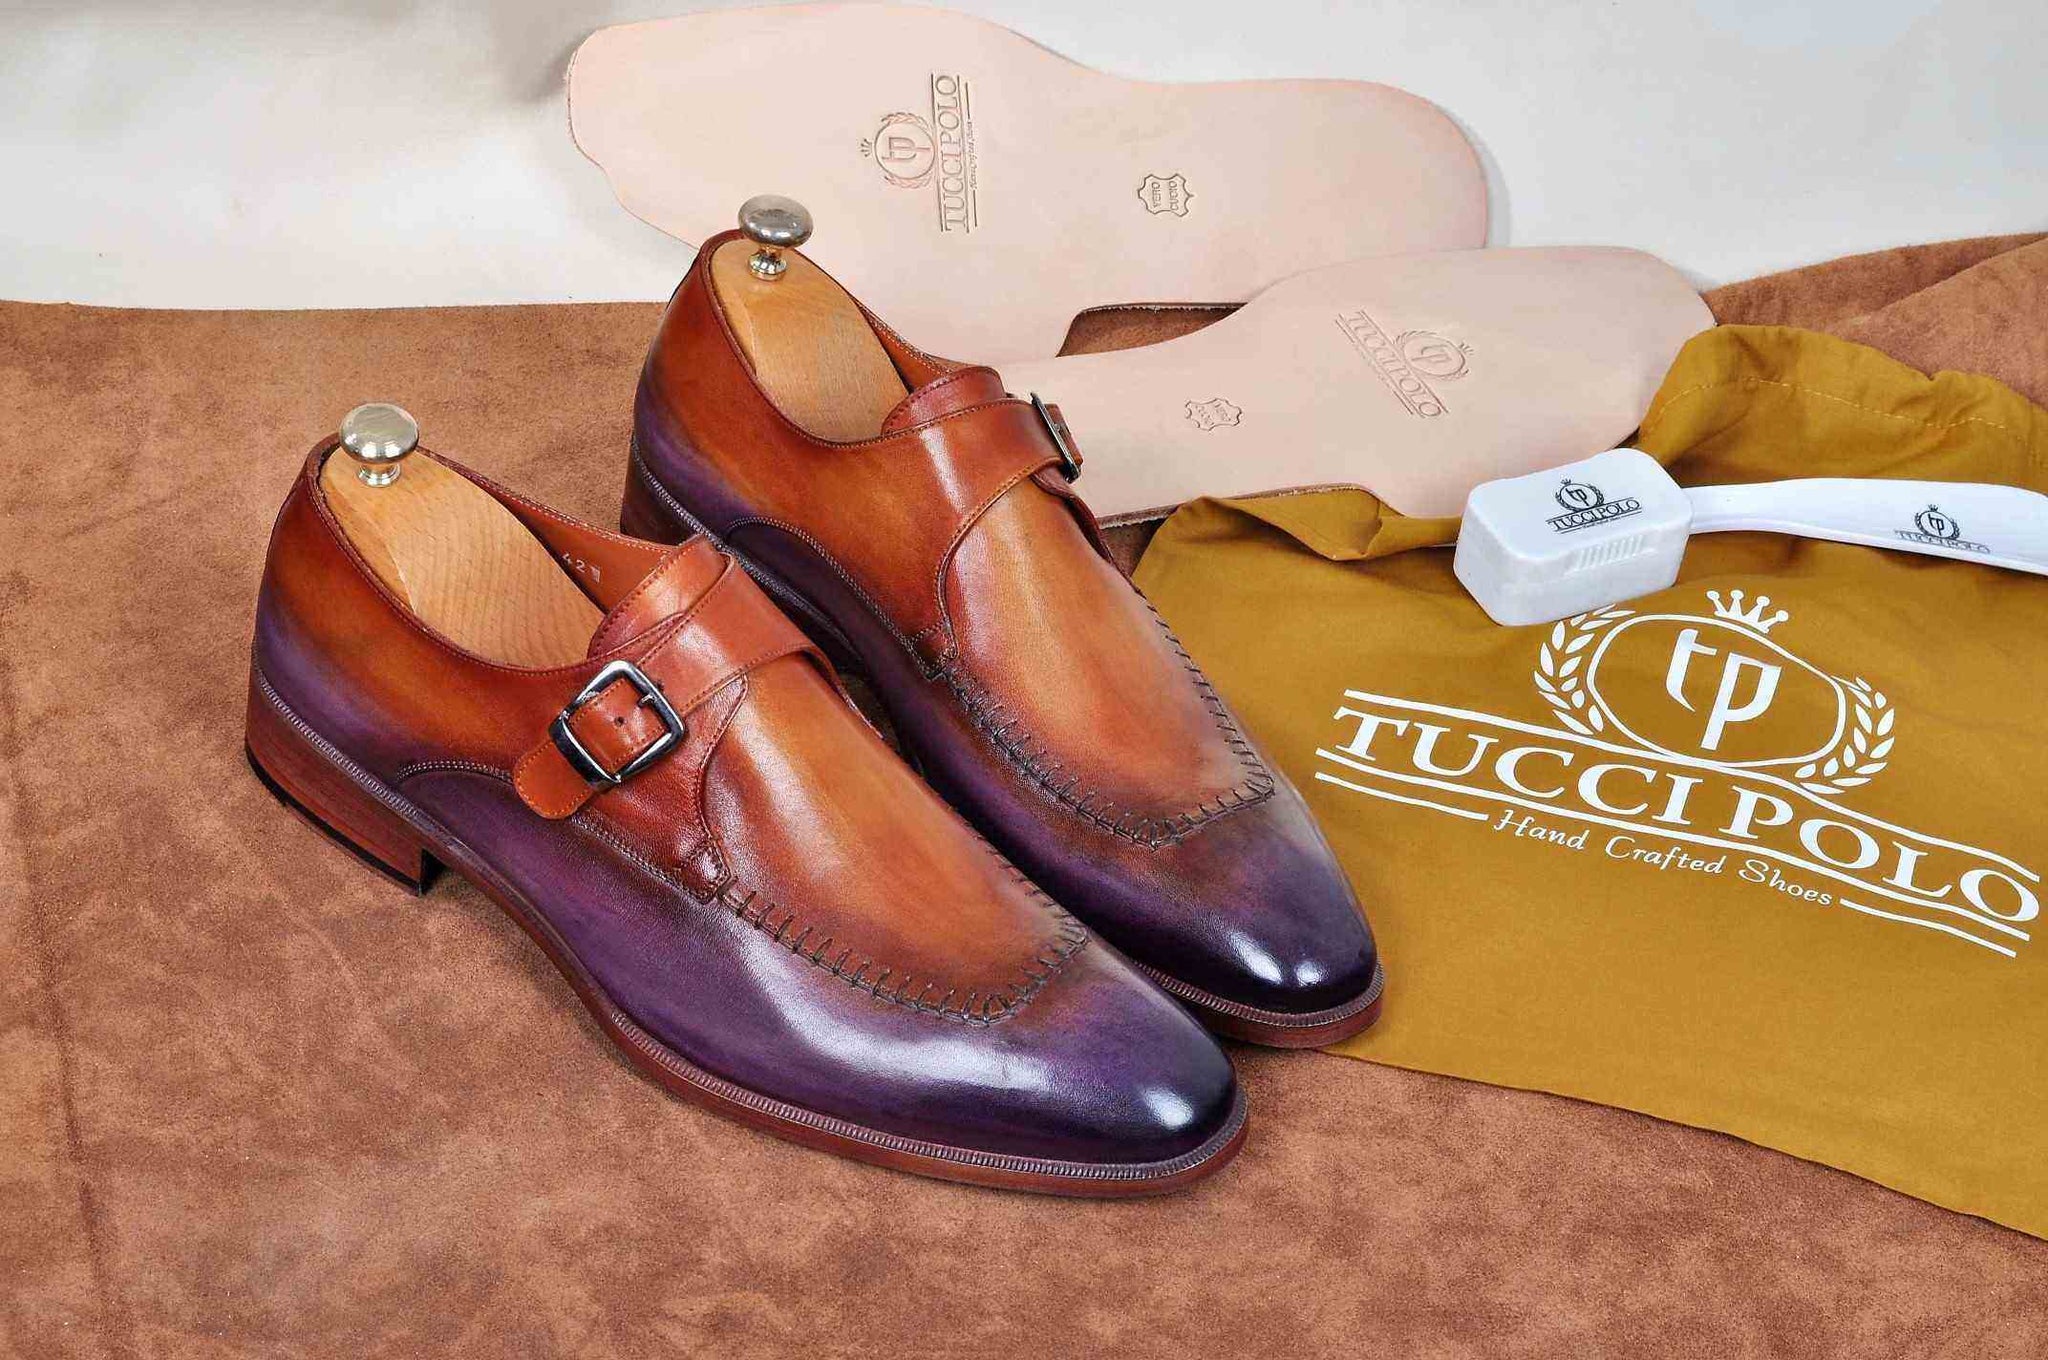 tuccipolo shoes